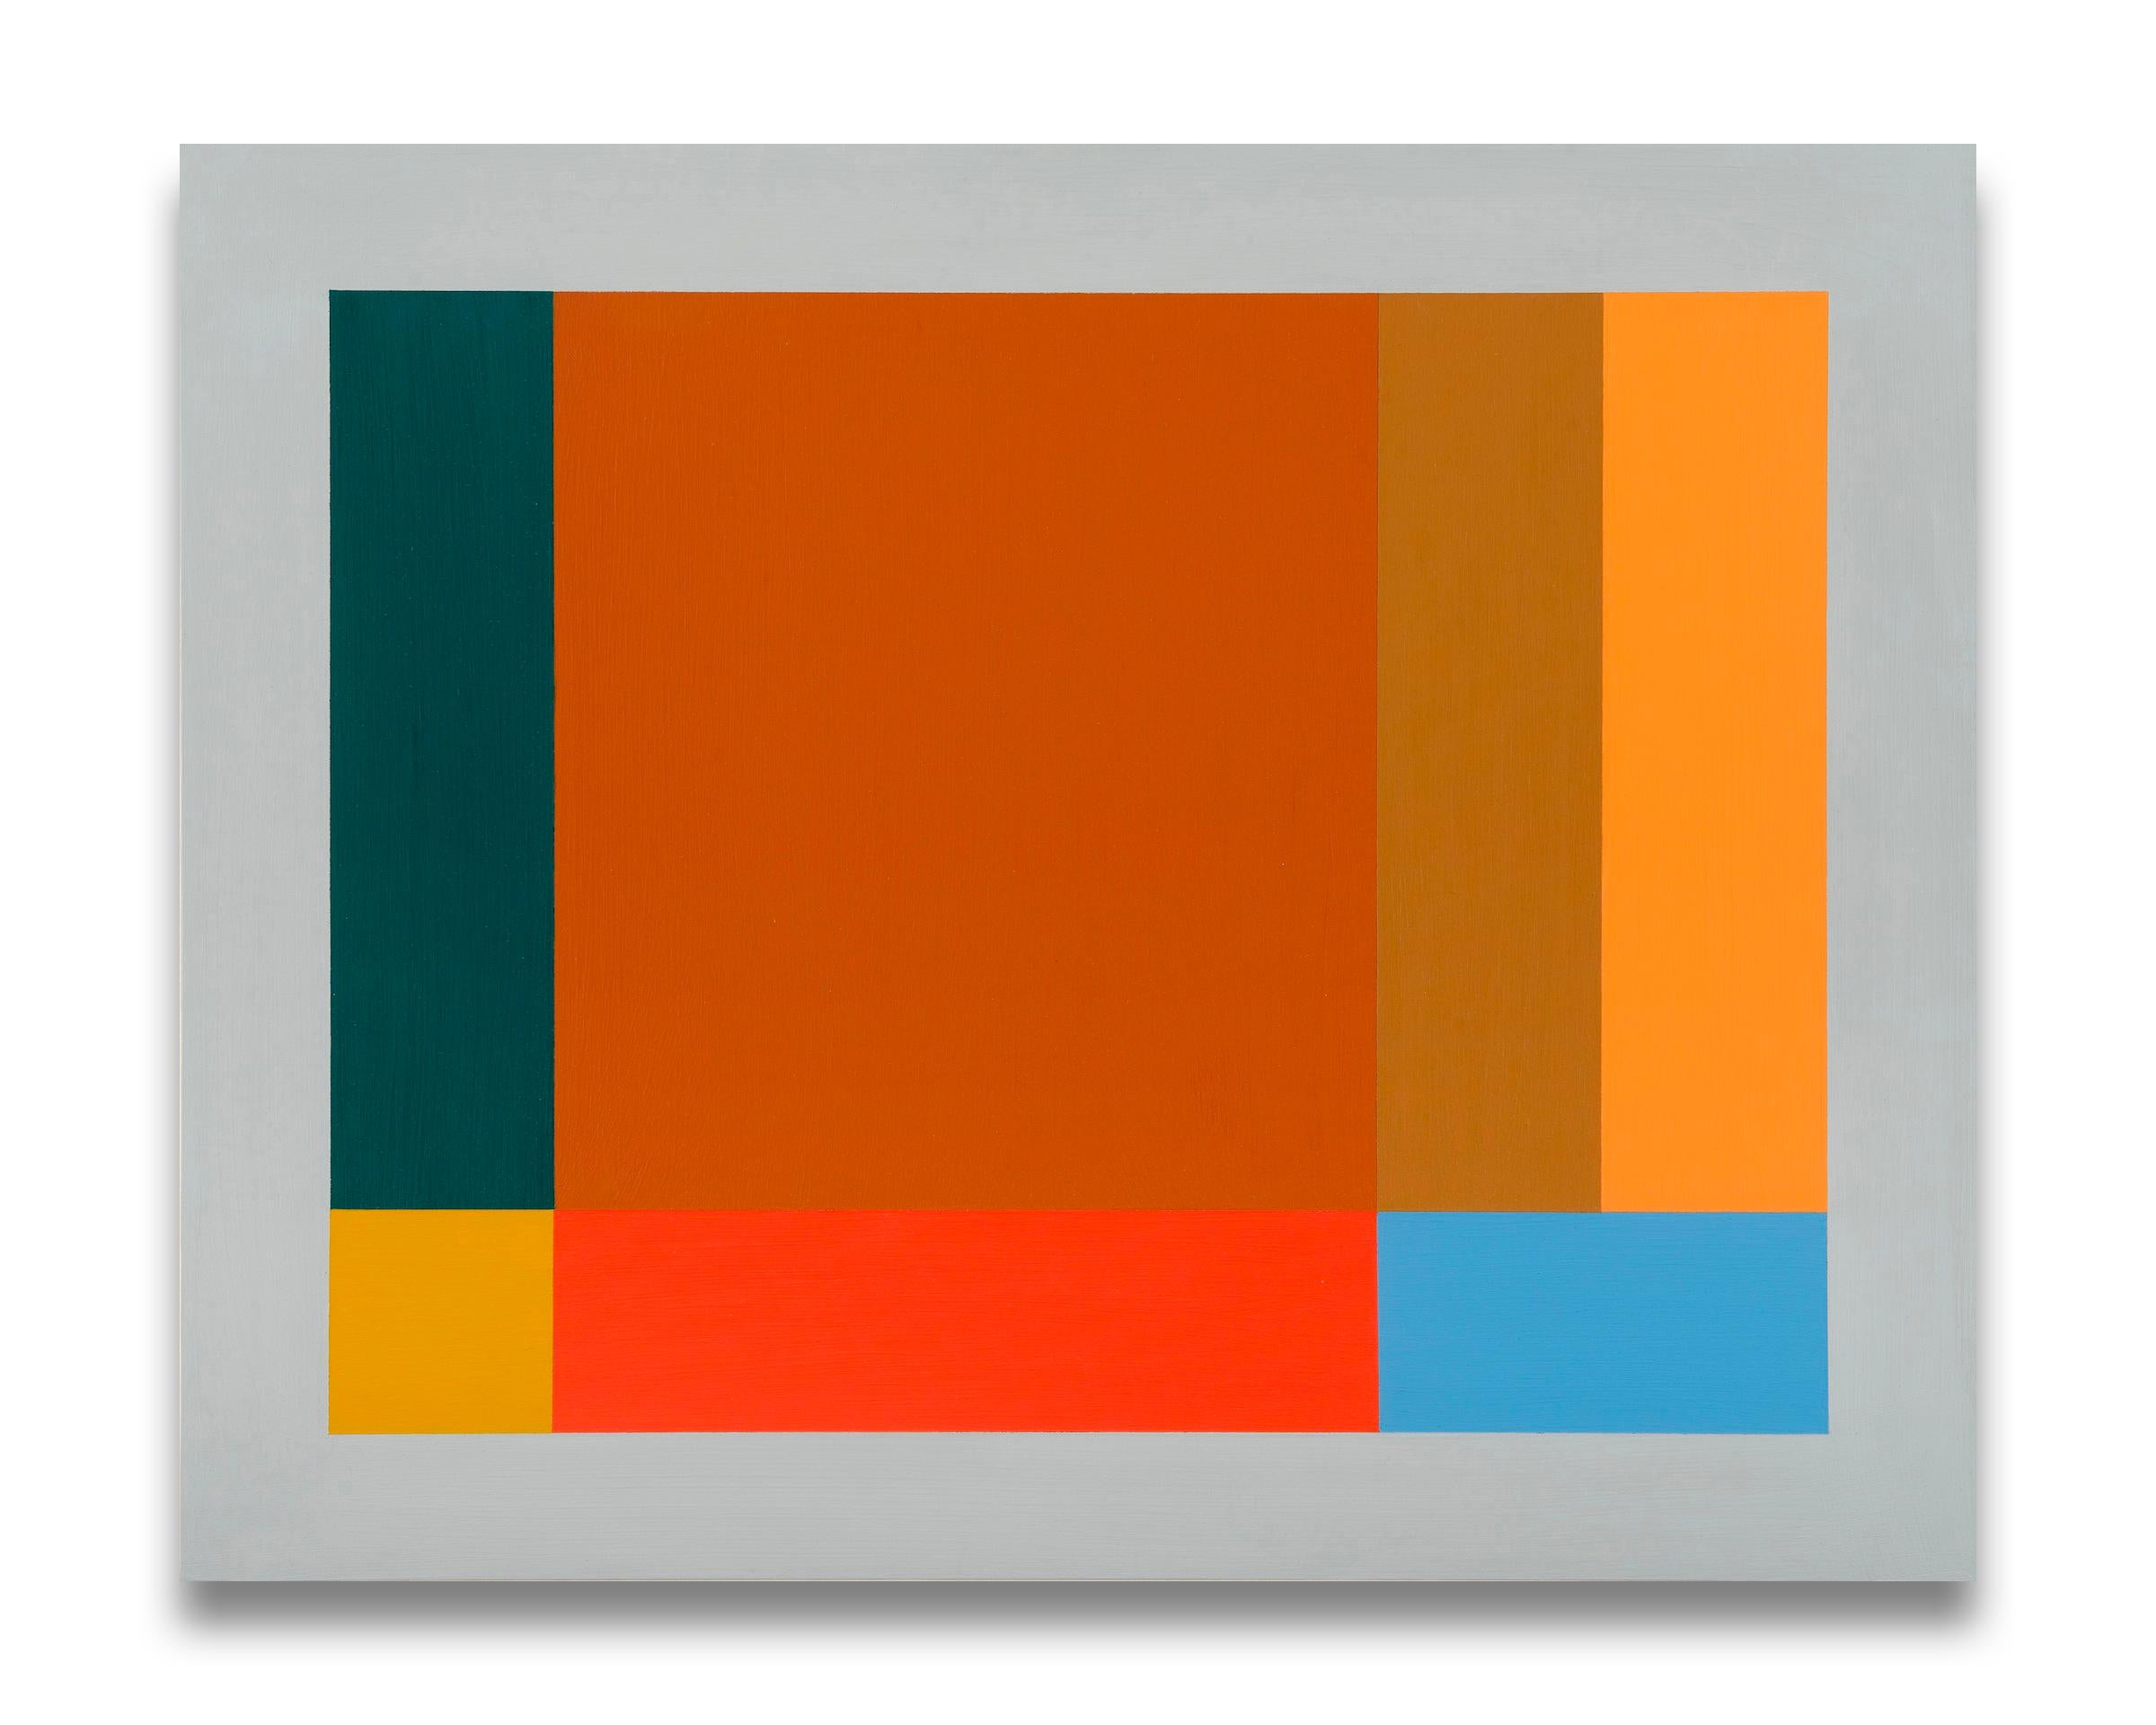 Abstract Painting Tom McGlynn - Petit motif de test 4 (peinture abstraite)